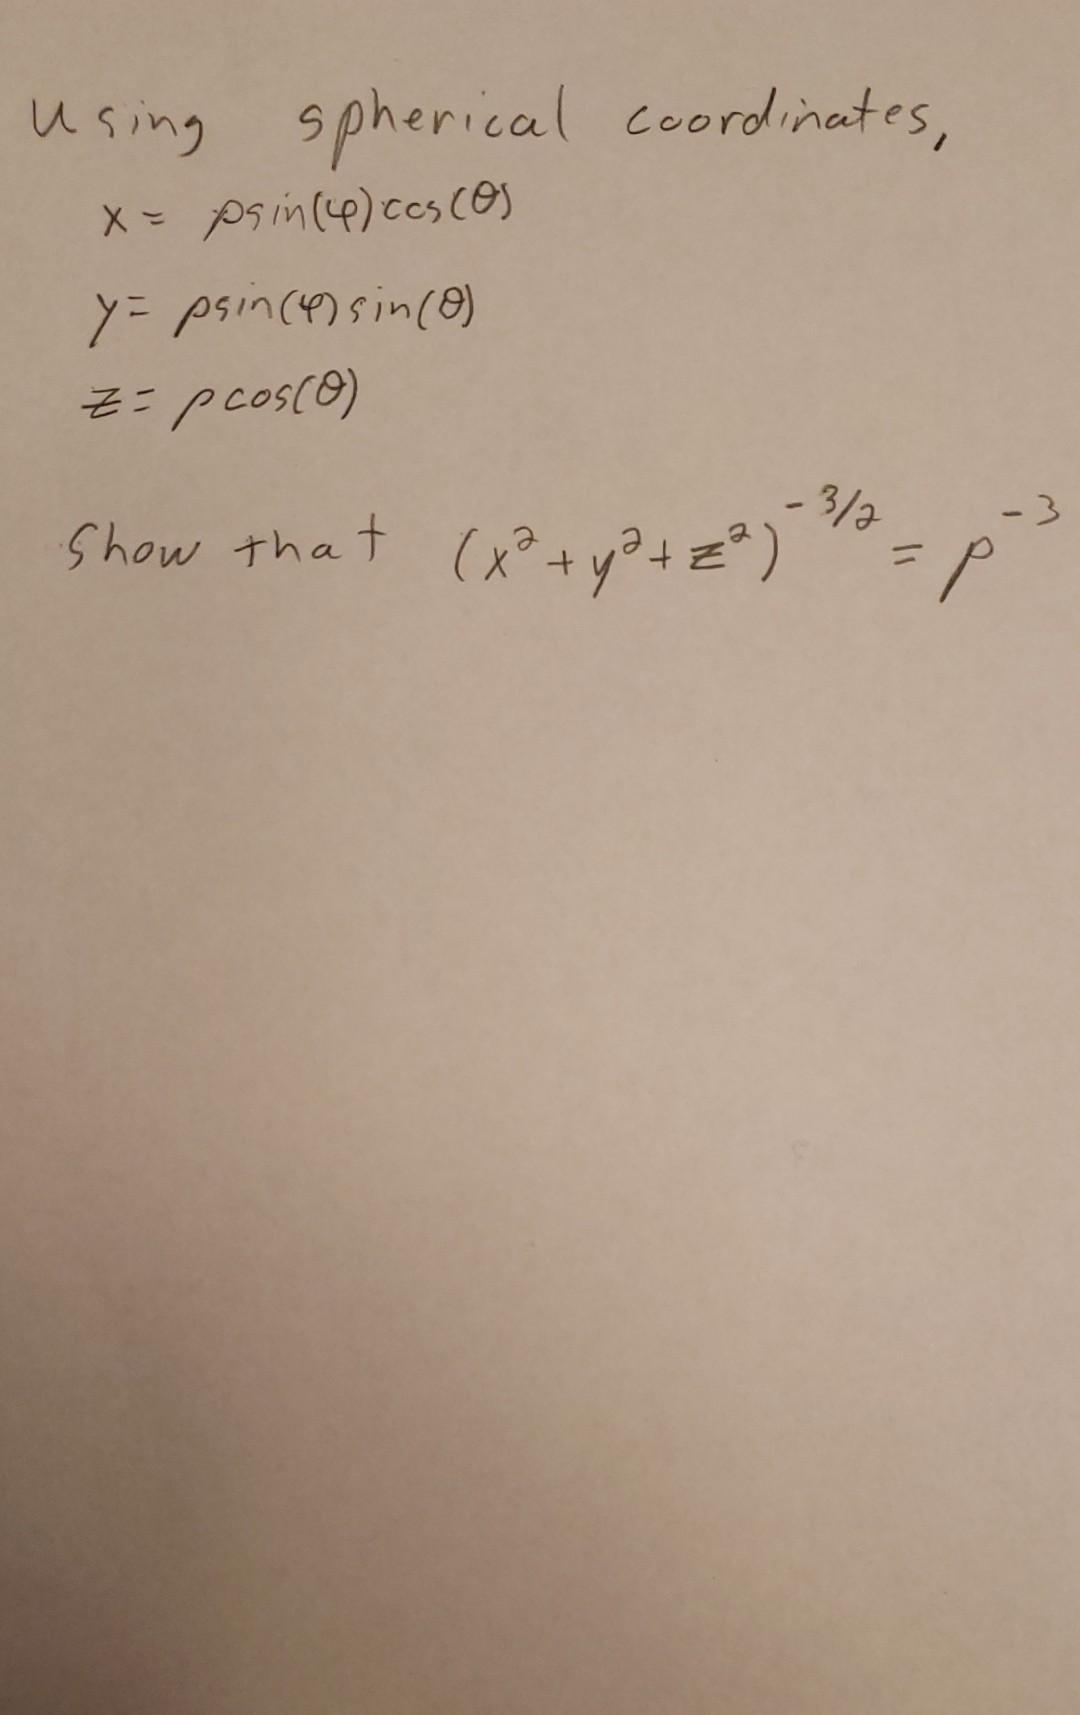 using spherical coordinates,
x= psin (4) ces cos
y = psin (4) sin(0)
z=pcosco)
,3/2, P
-3
show that (x² + y² +2²)
z*